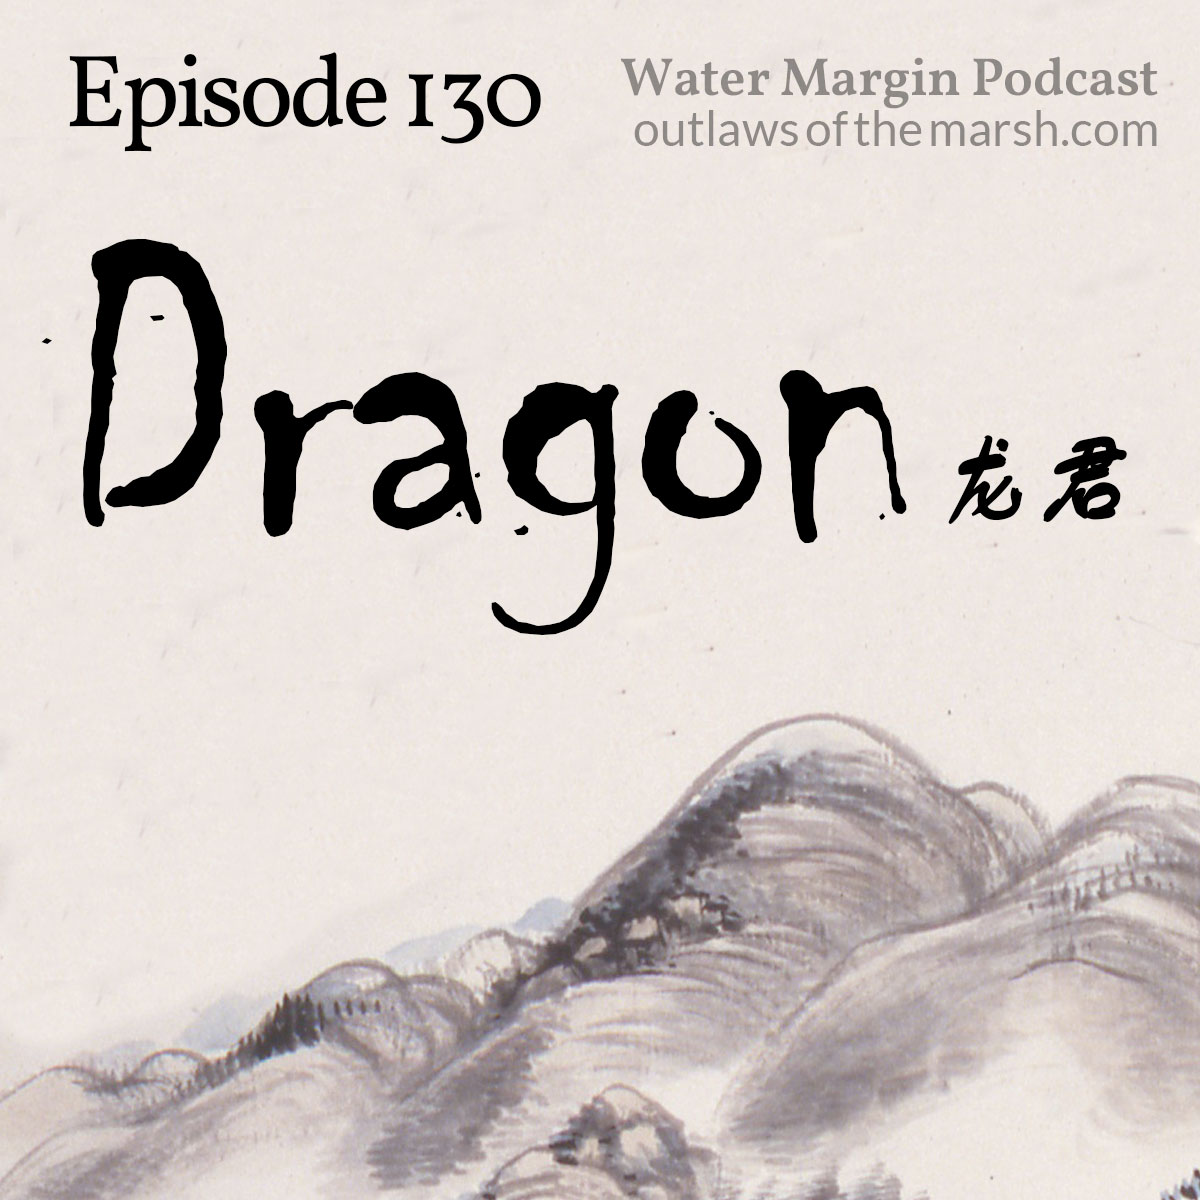 Water Margin Podcast: Episode 130